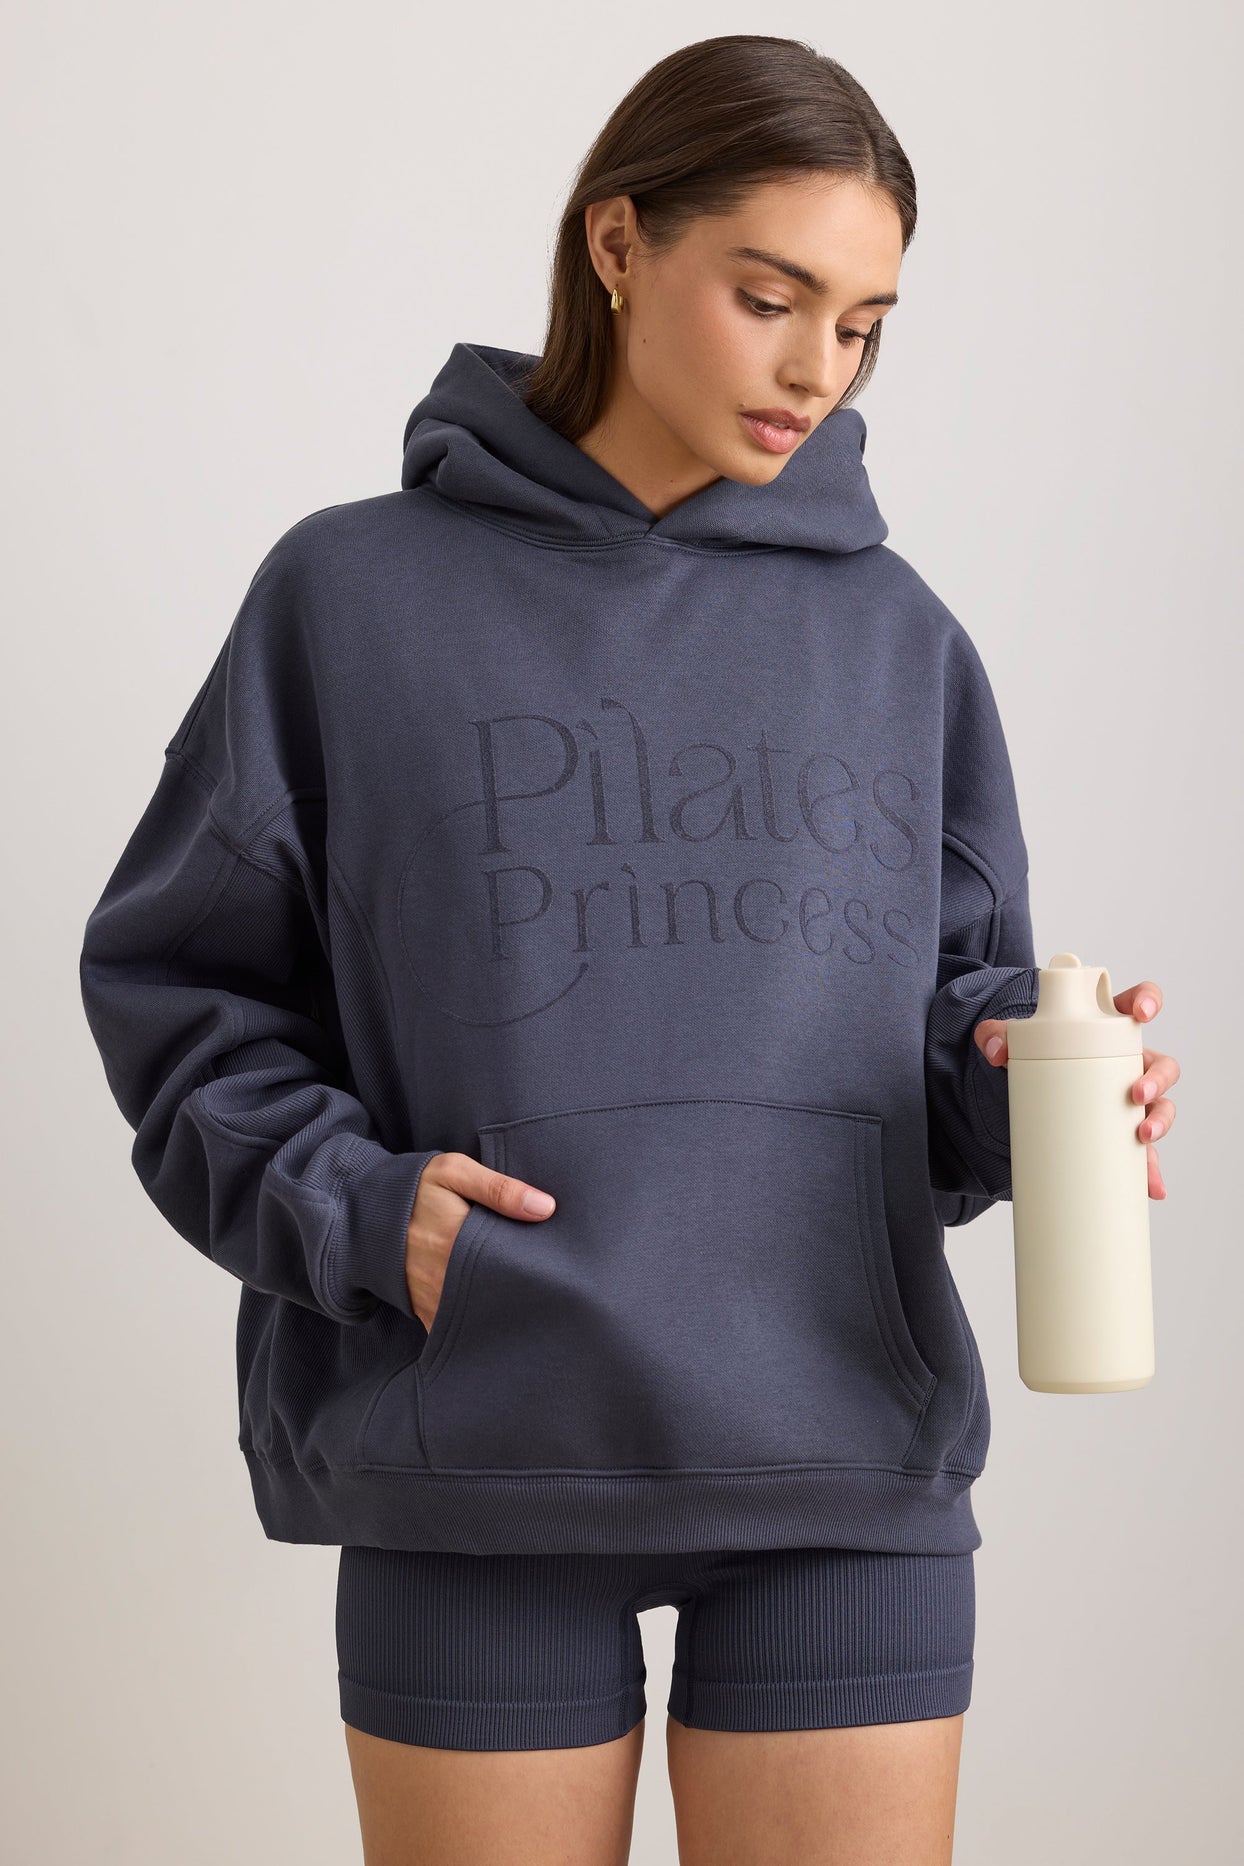 Pilates Princess Oversized Hooded Sweatshirt in Slate